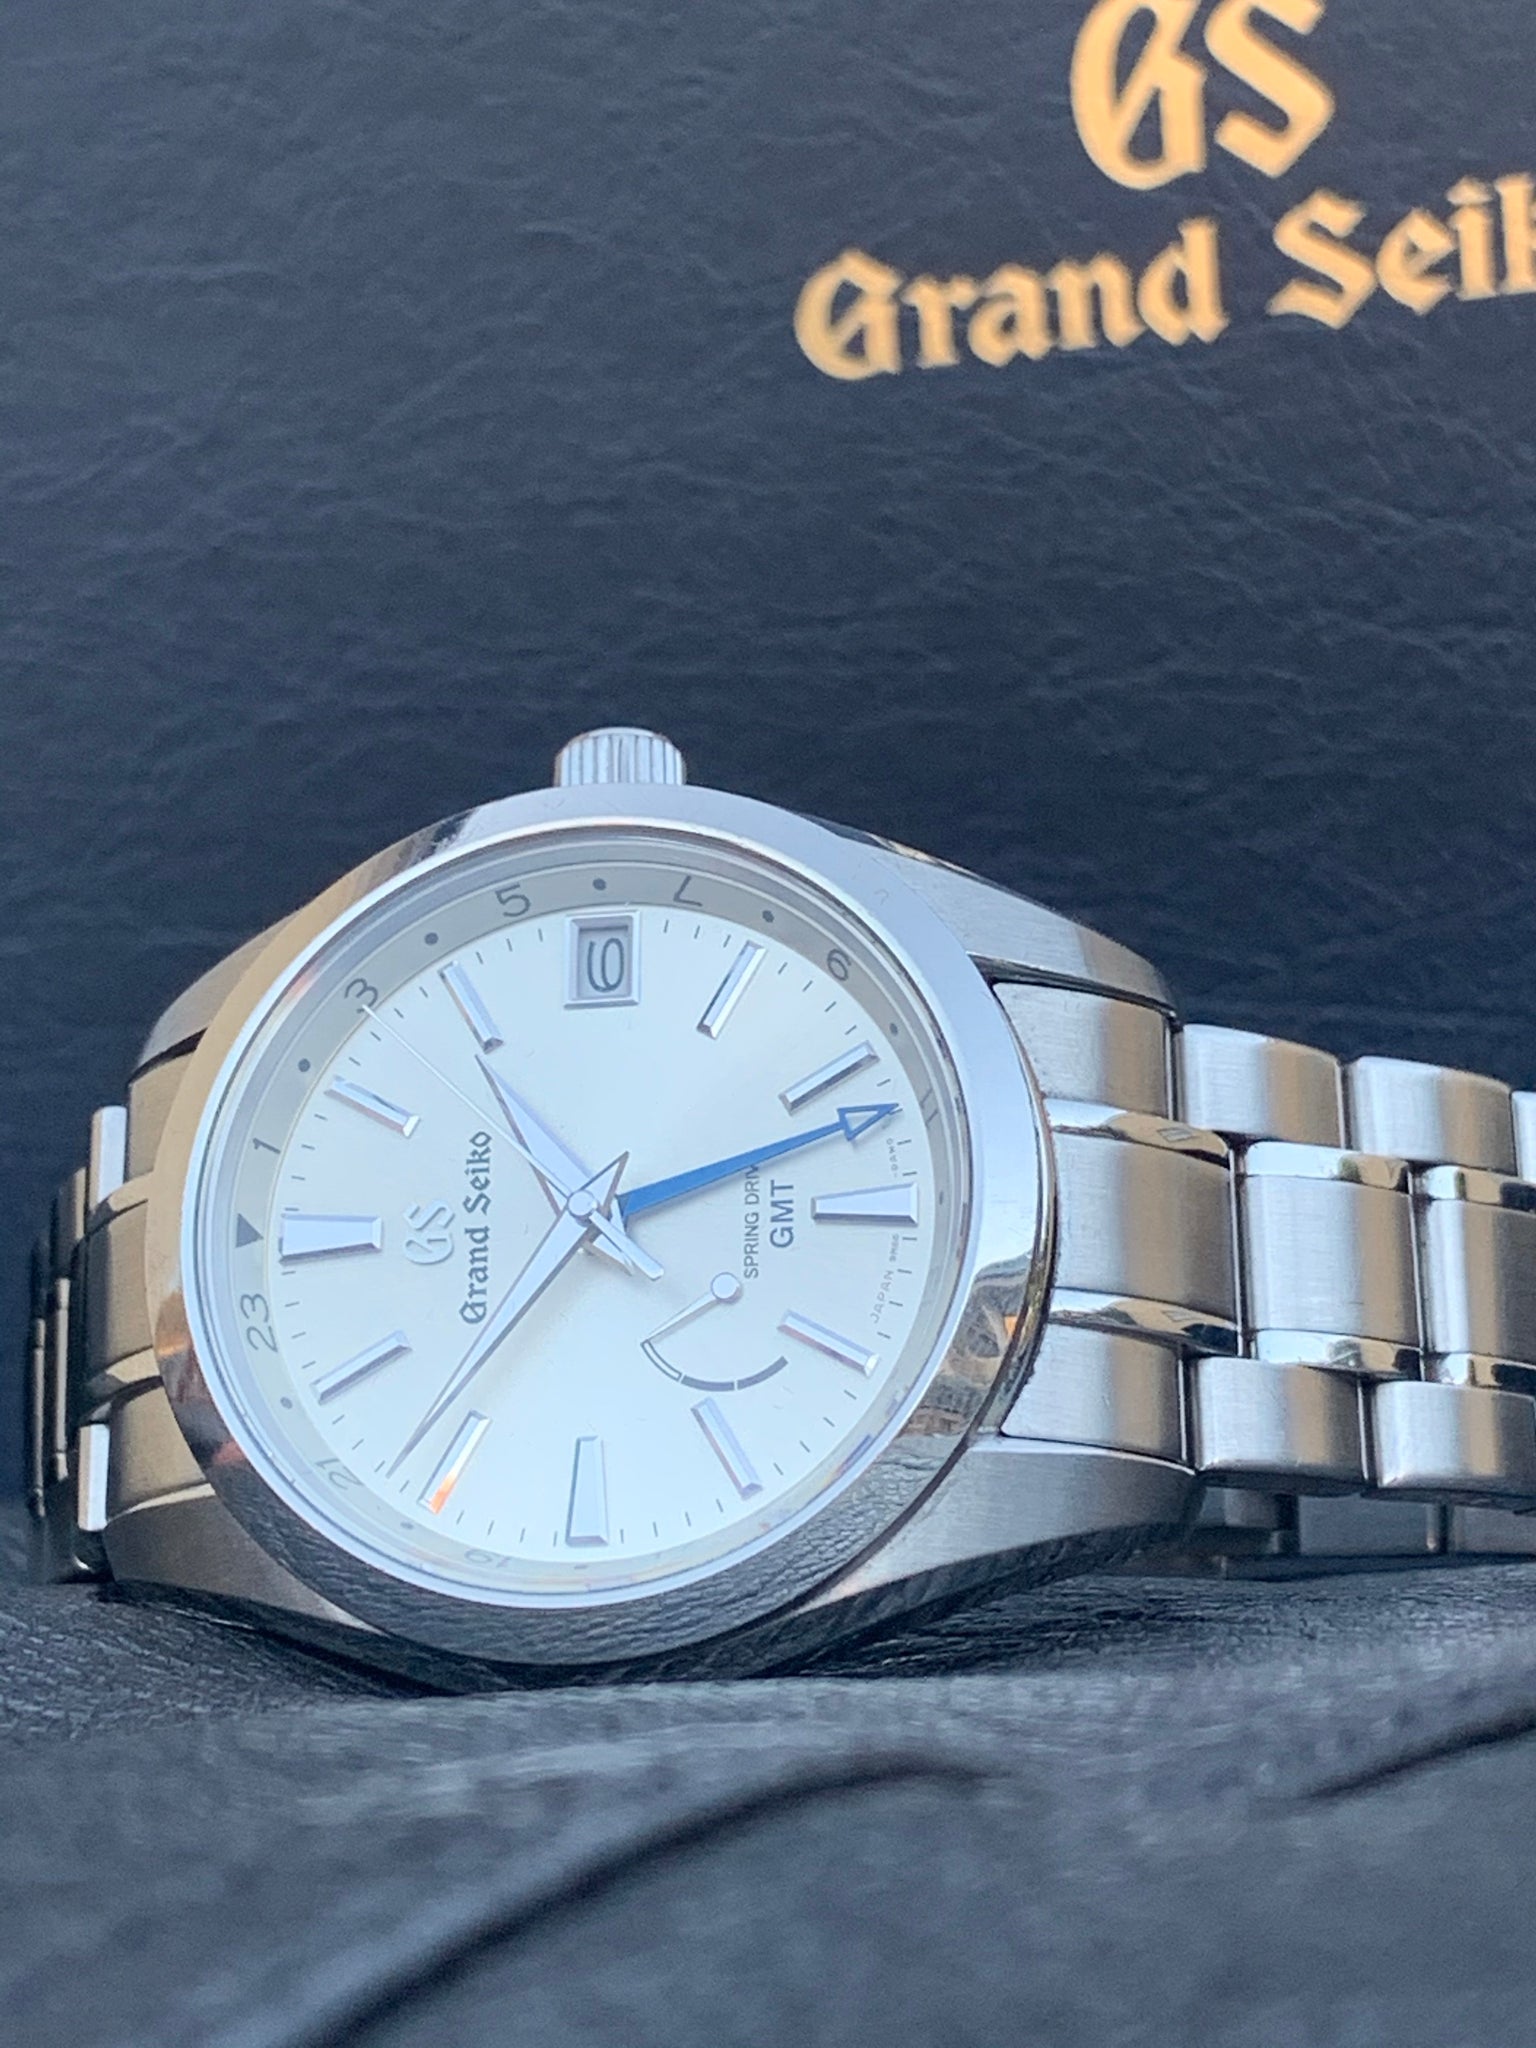 2018 Grand Seiko GMT Springdrive, ref: SBGE205, warranty! – WOFS Watches